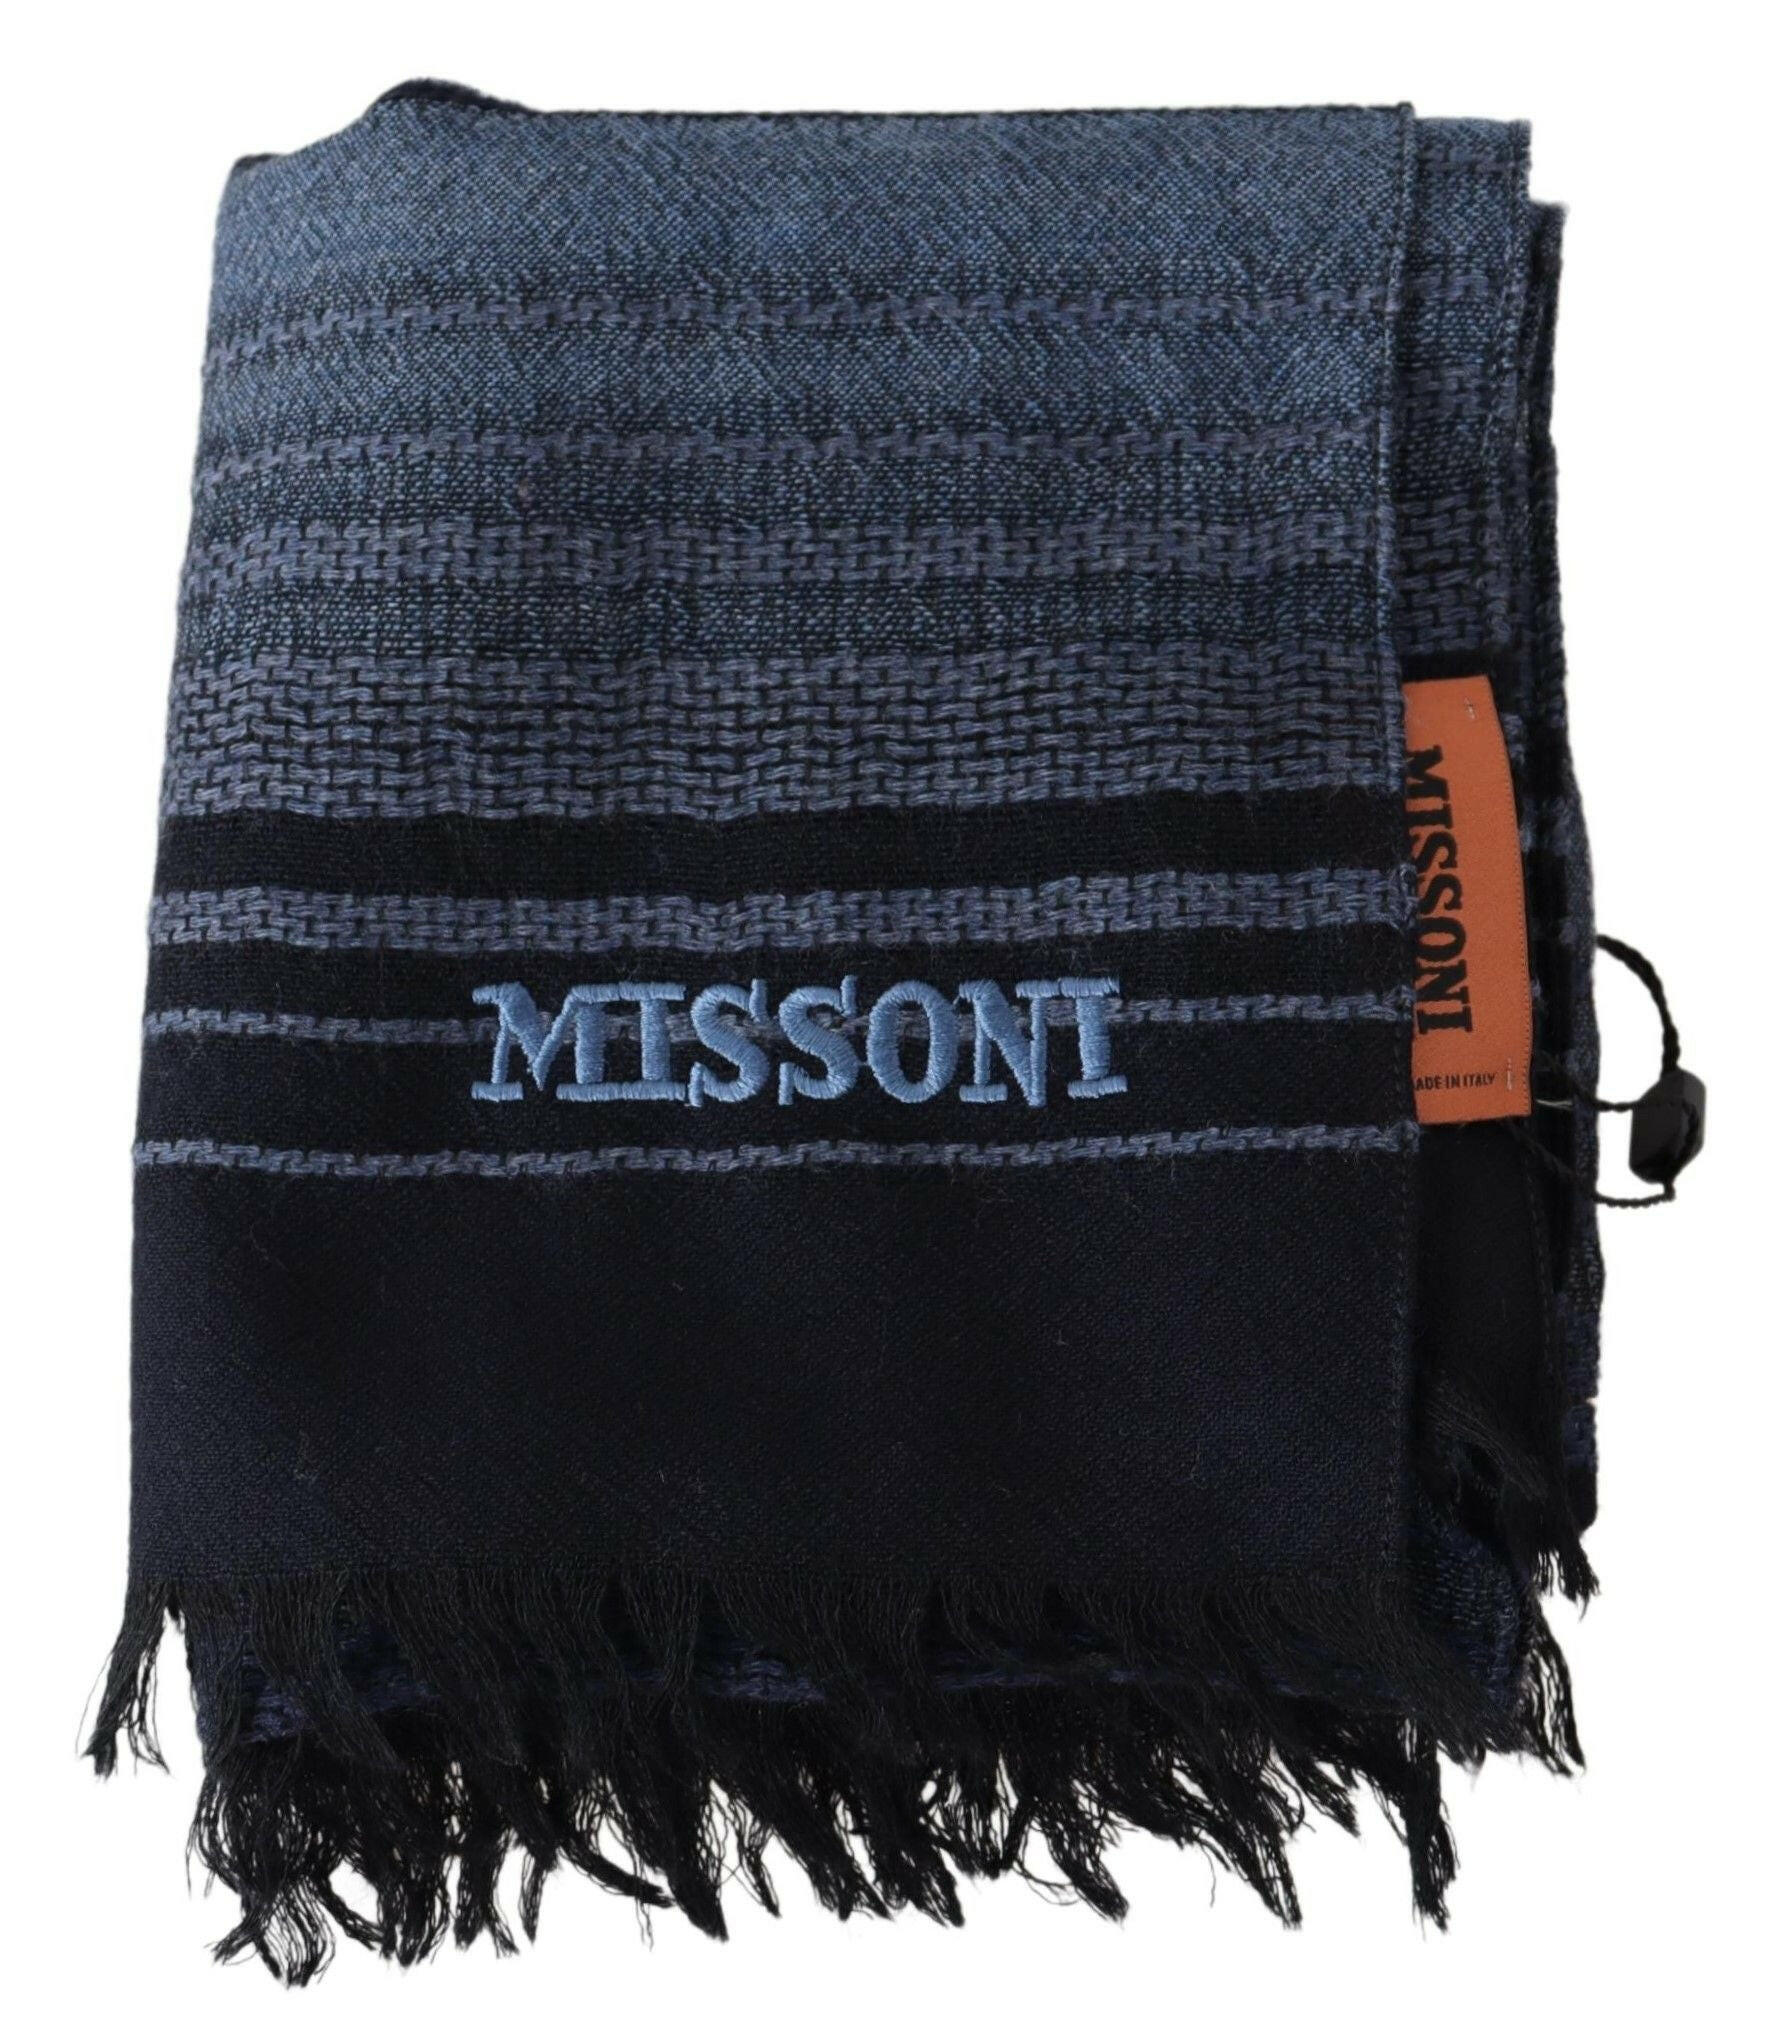 Missoni Multicolor Patterned Wool Unisex Neck Wrap Shawl - GENUINE AUTHENTIC BRAND LLC  